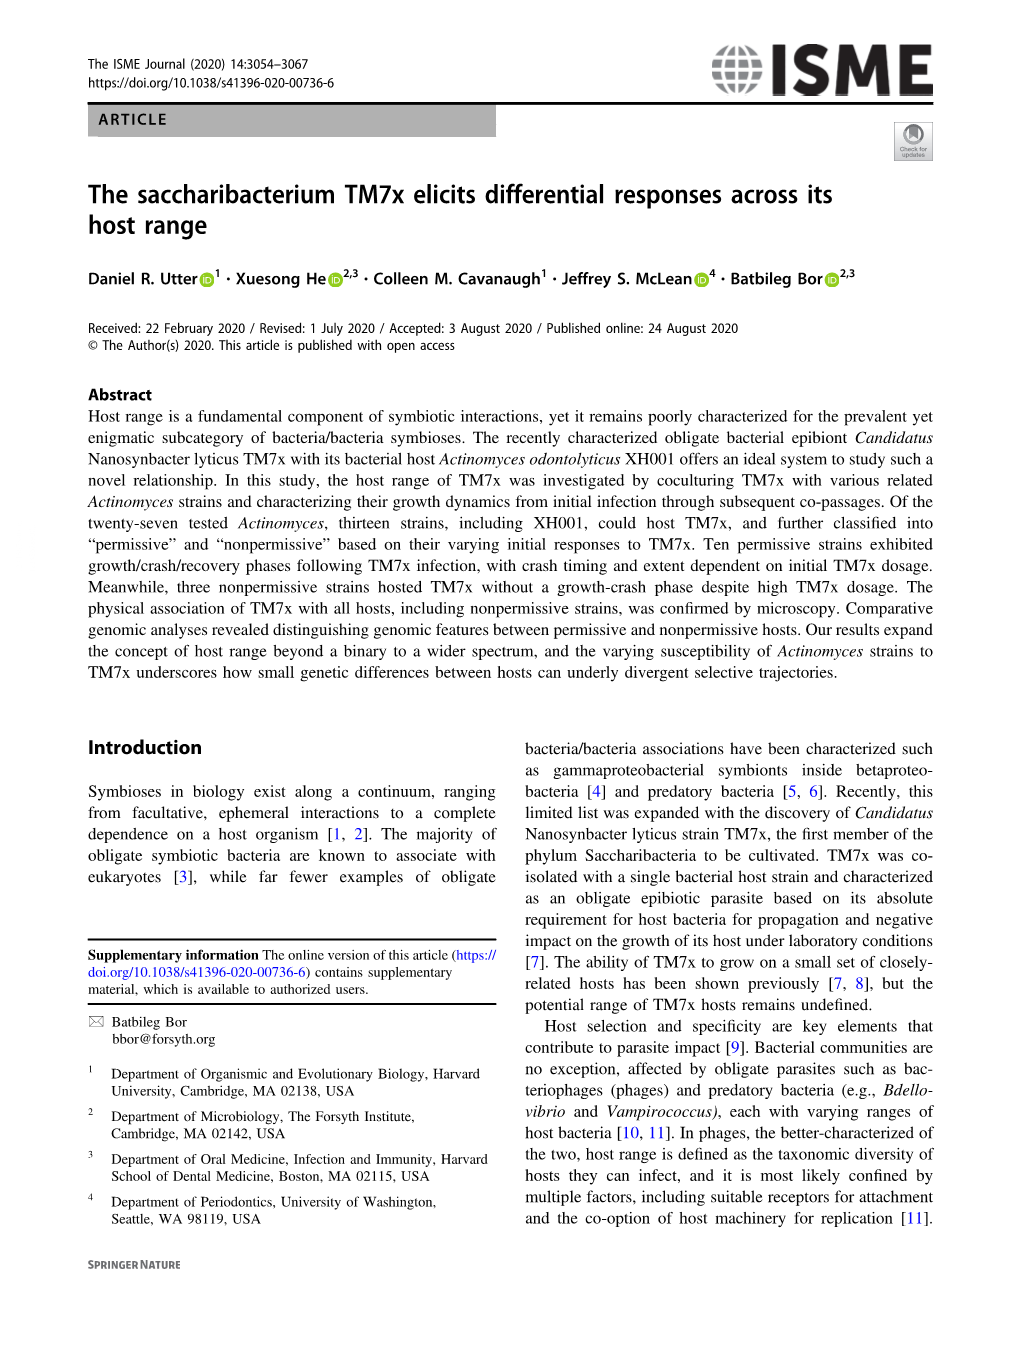 The Saccharibacterium Tm7x Elicits Differential Responses Across Its Host Range